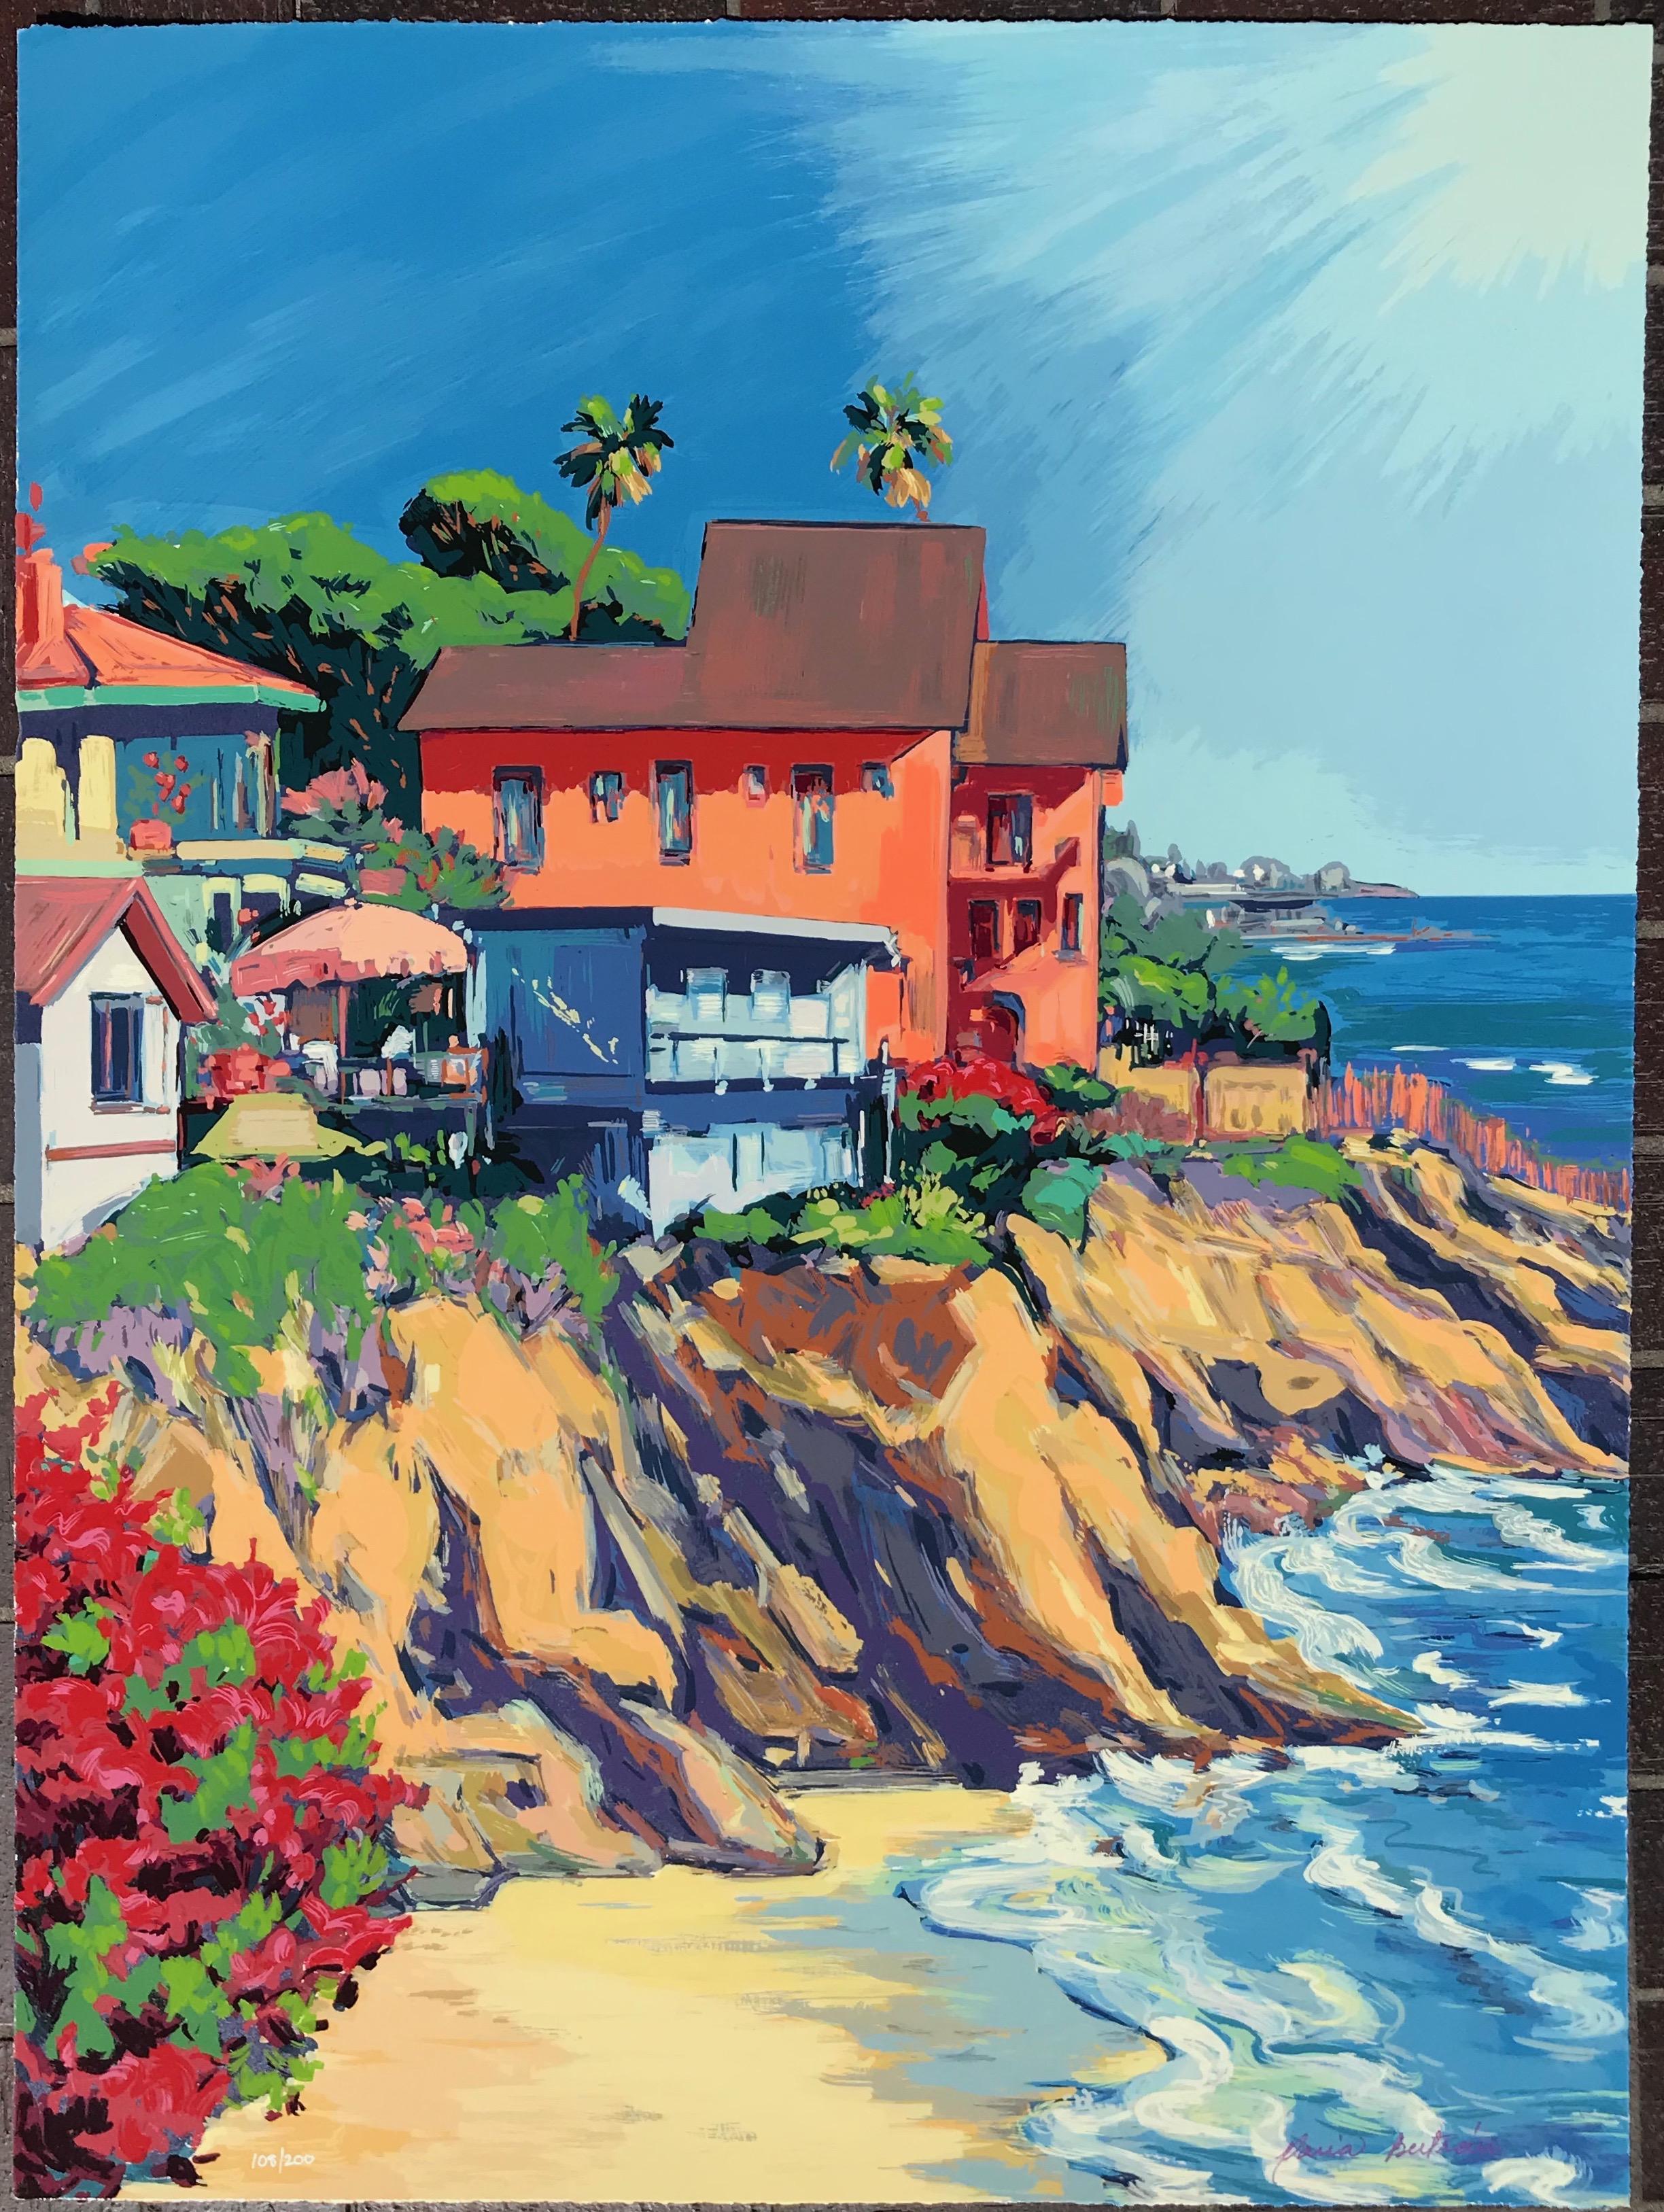 Maria Bertrán Landscape Print - "Woods Cove" Contemporary Impressionist Serigraph of Laguna Beach